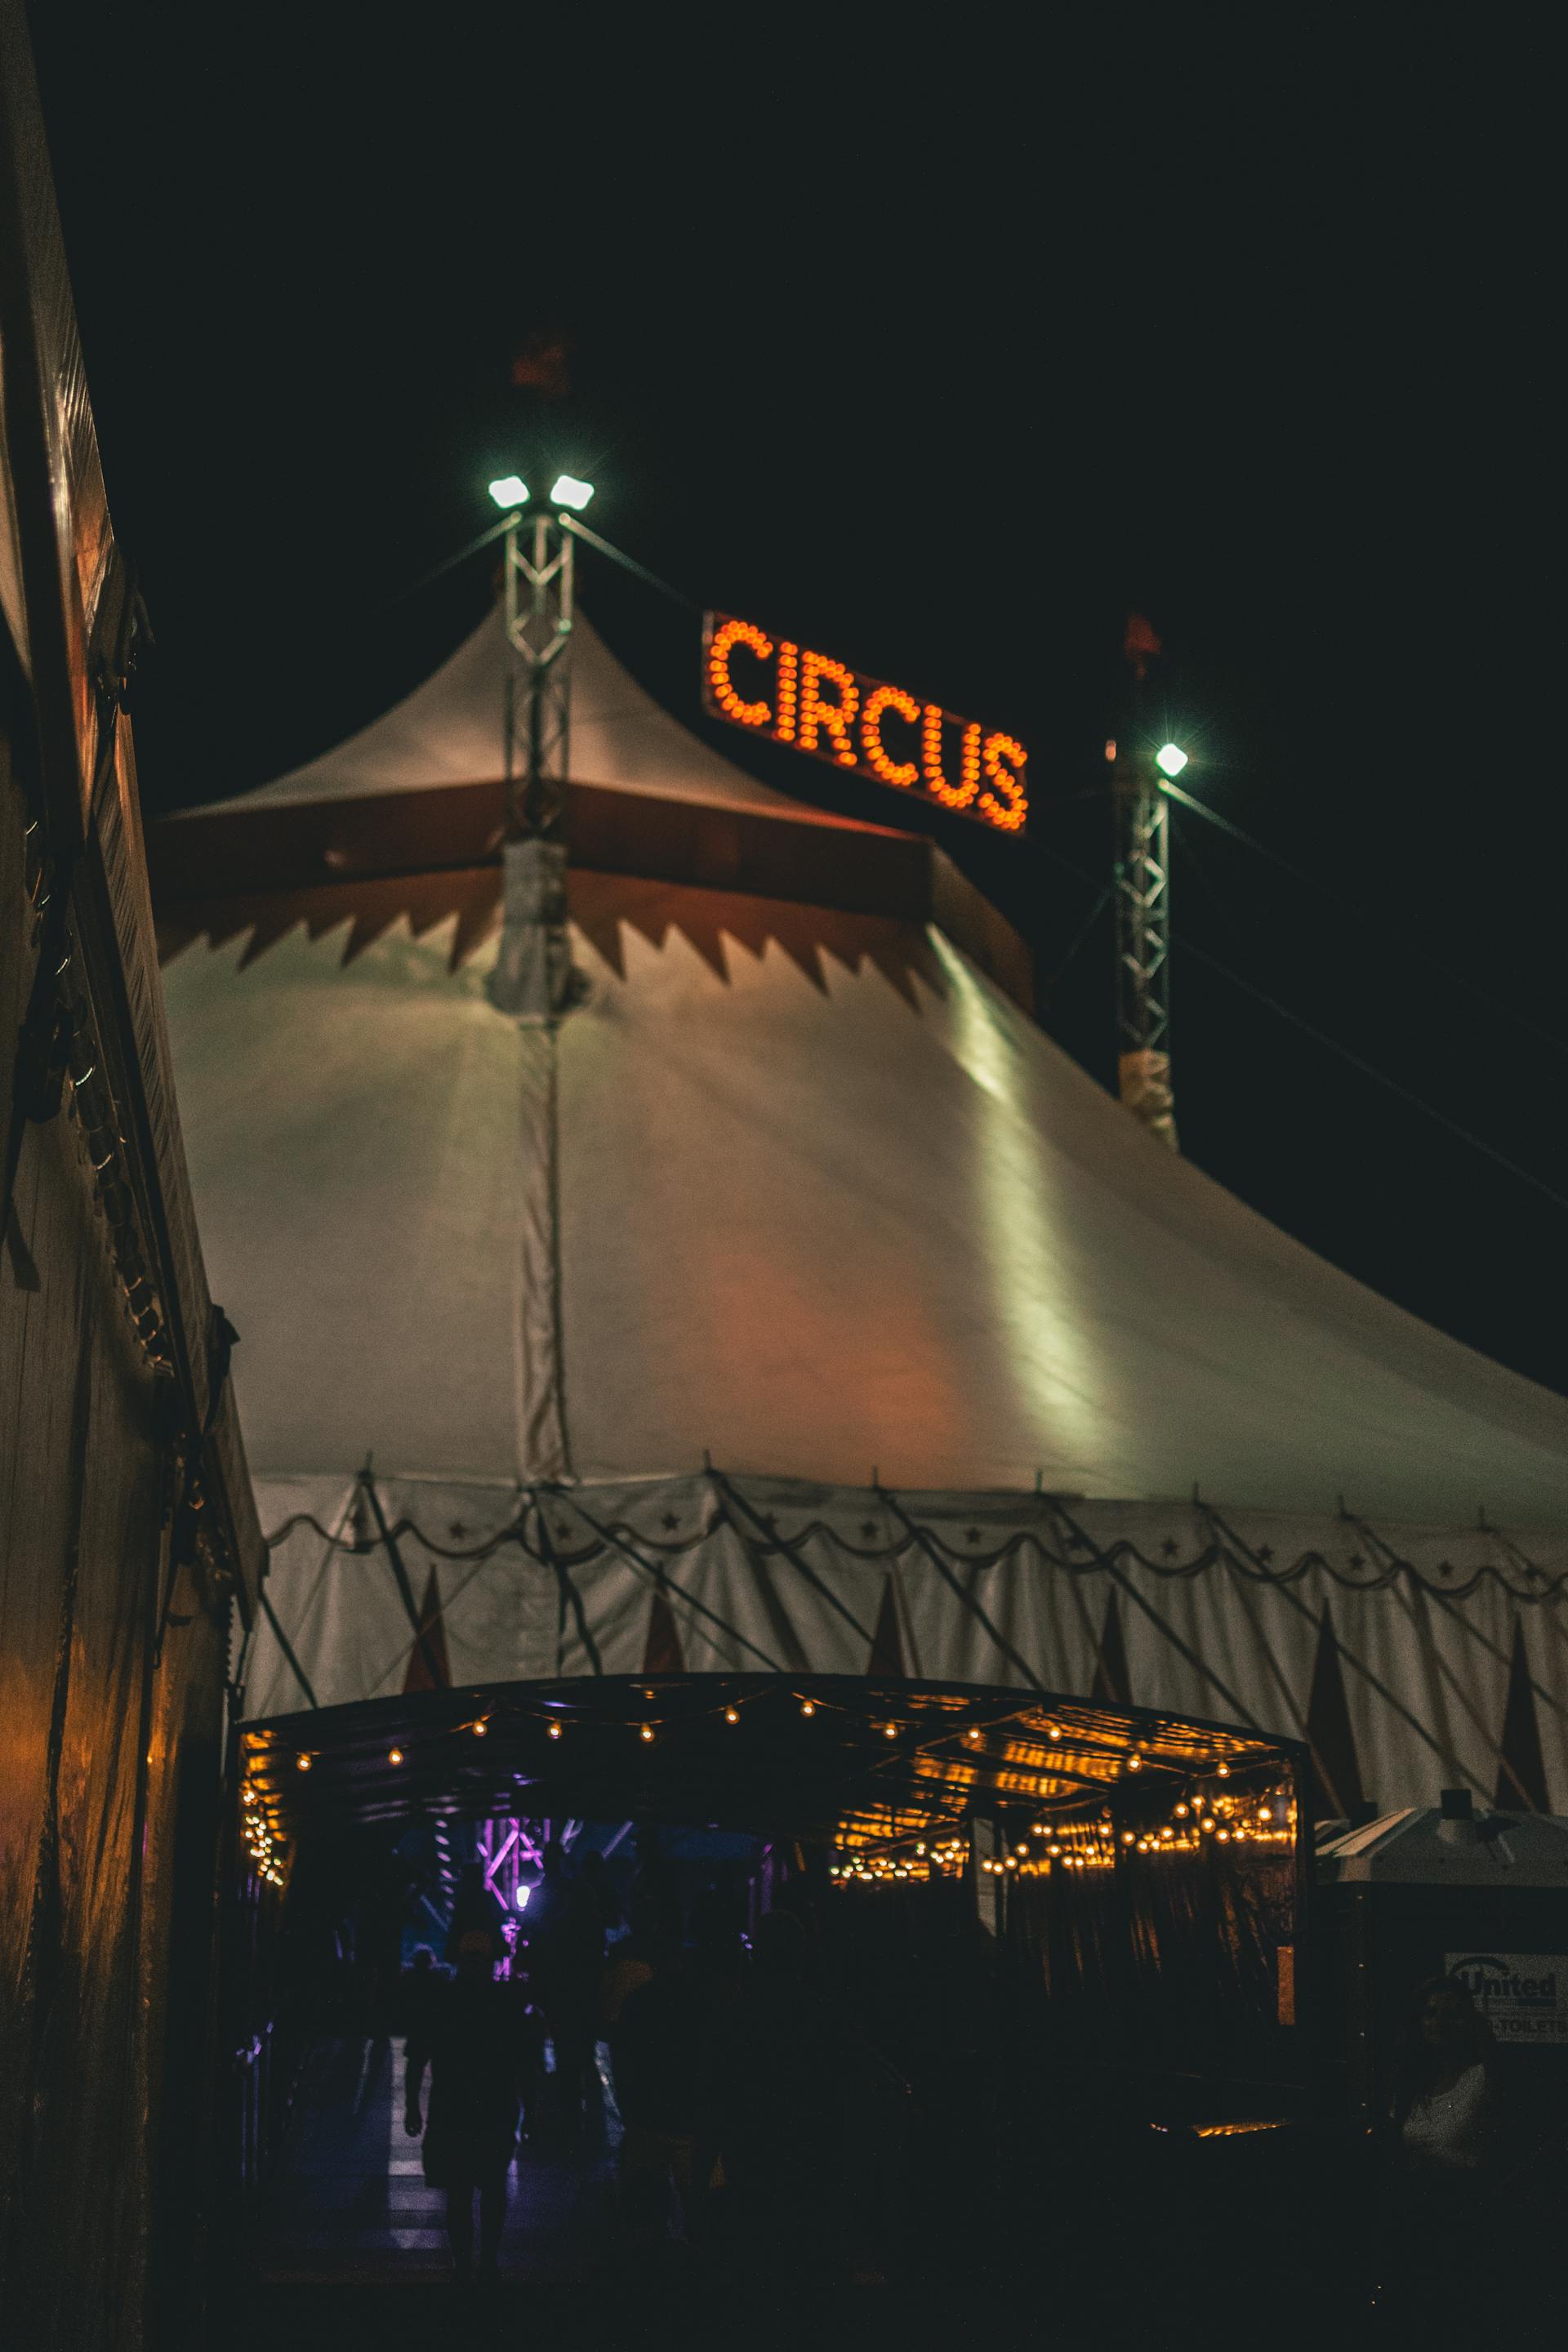 A circus tent at night | Source: Pexels